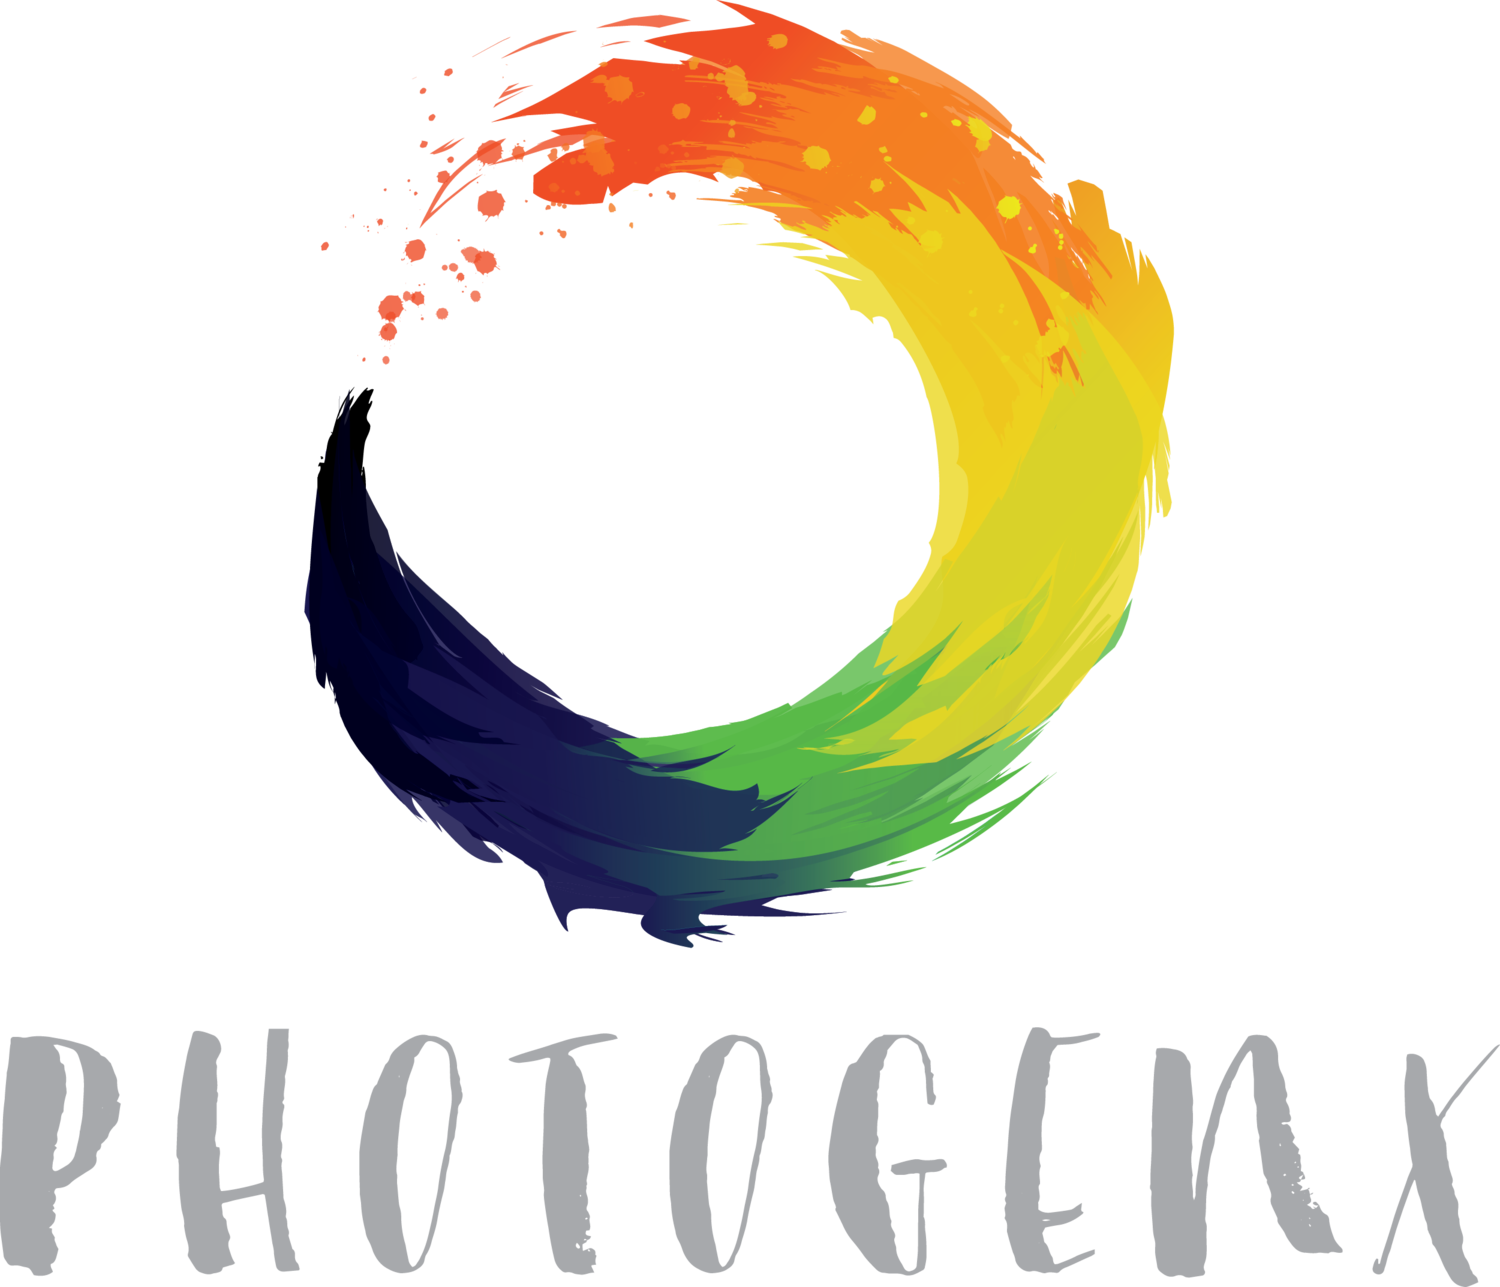 PhotogenX